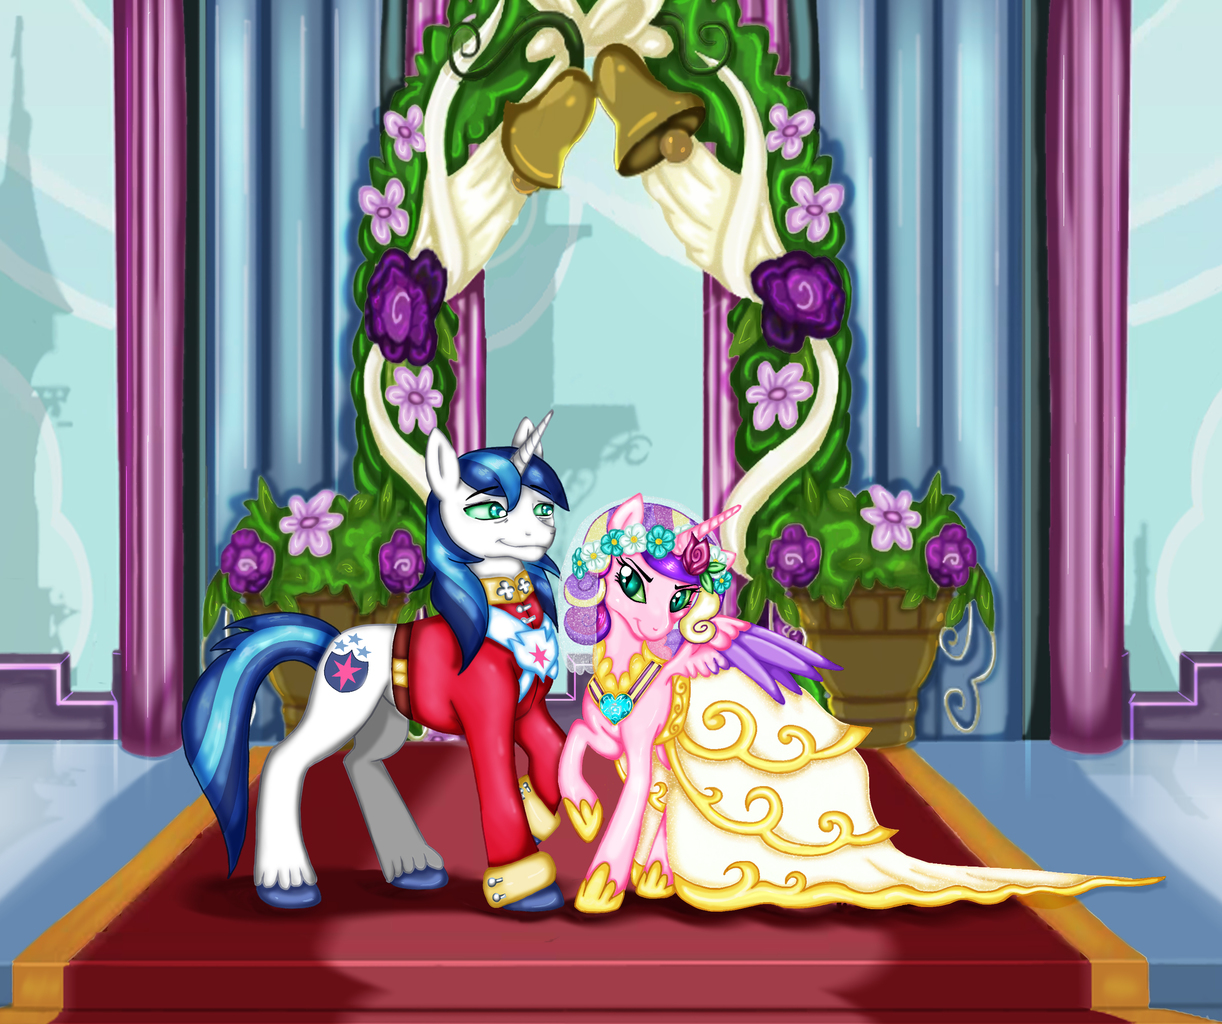 Pony day. My little Pony свадьба в Кантерлоте. Принцесса Каденс и Шайнинг Армор. Пони принцесса Каденс свадьба. Ария Каденс.